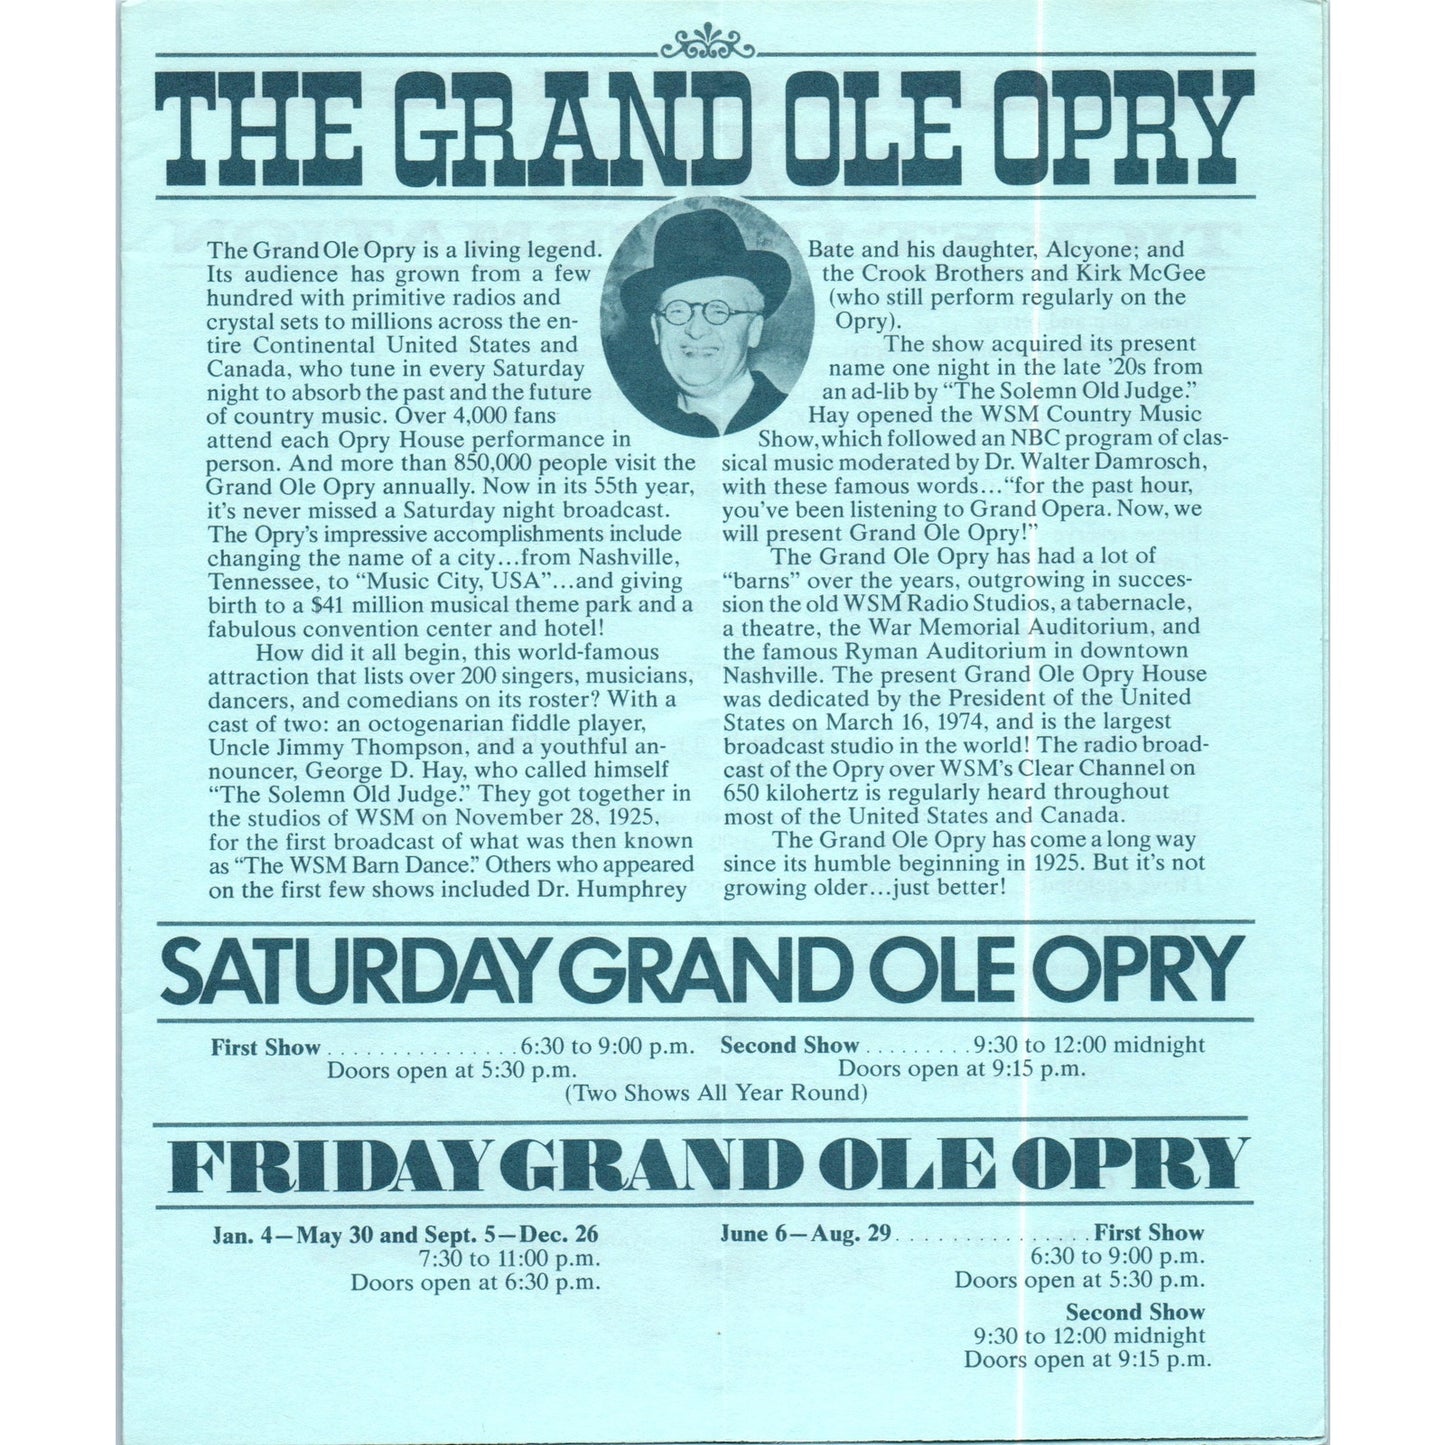 Vintage 1980 Grand Ole Opry Information Booklet Nashville TN Brochure TF4-B2